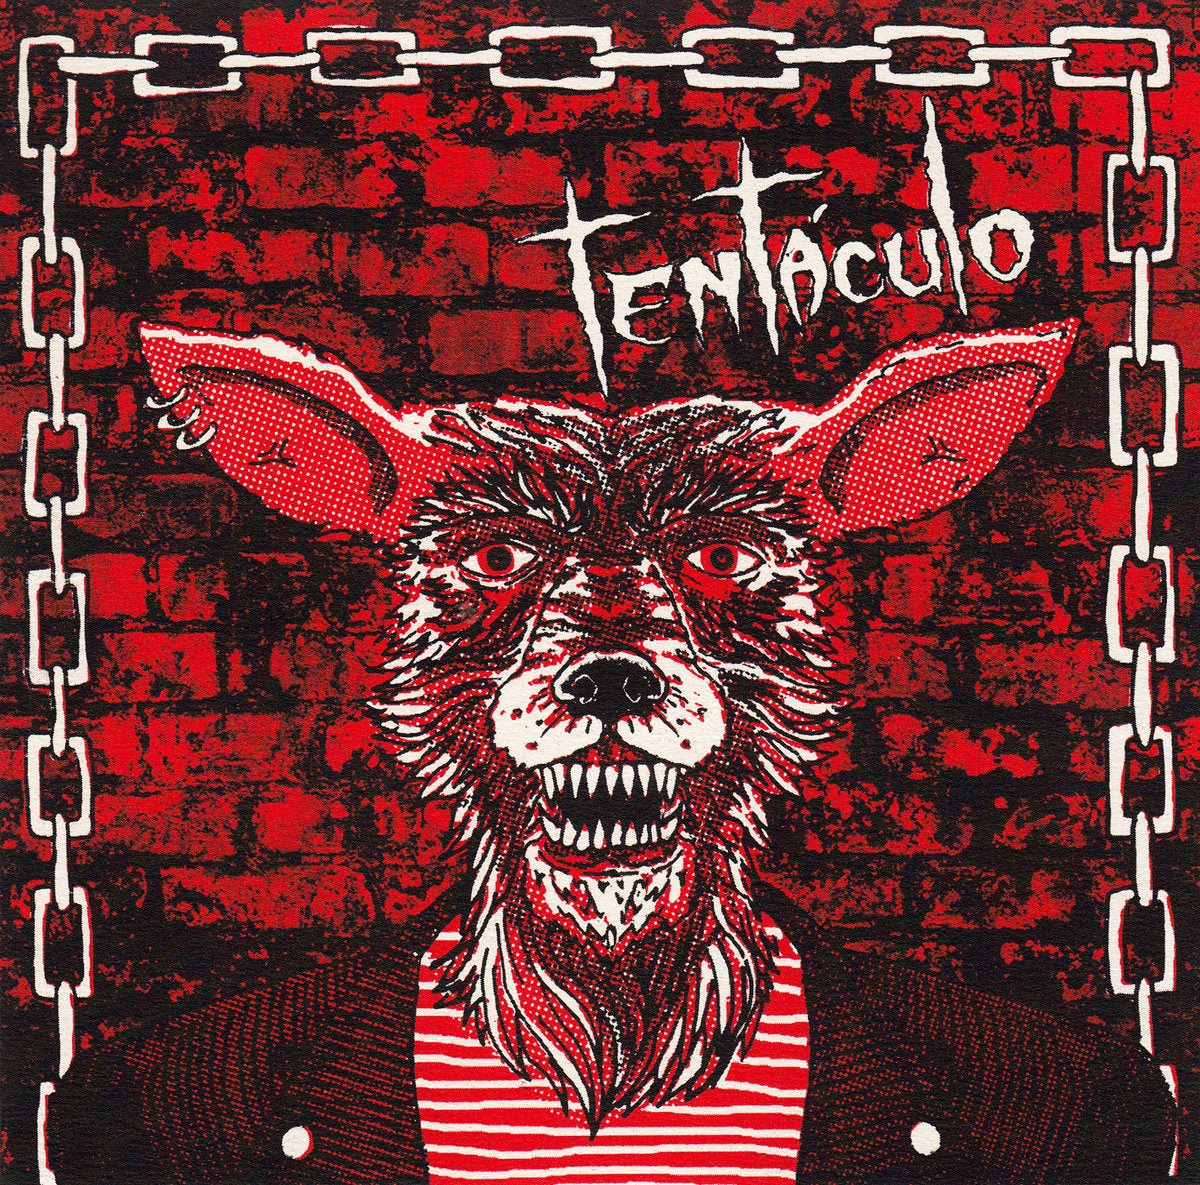 Tentaculo - s/t 7" - Vinyl - Andalucia Uber Alles